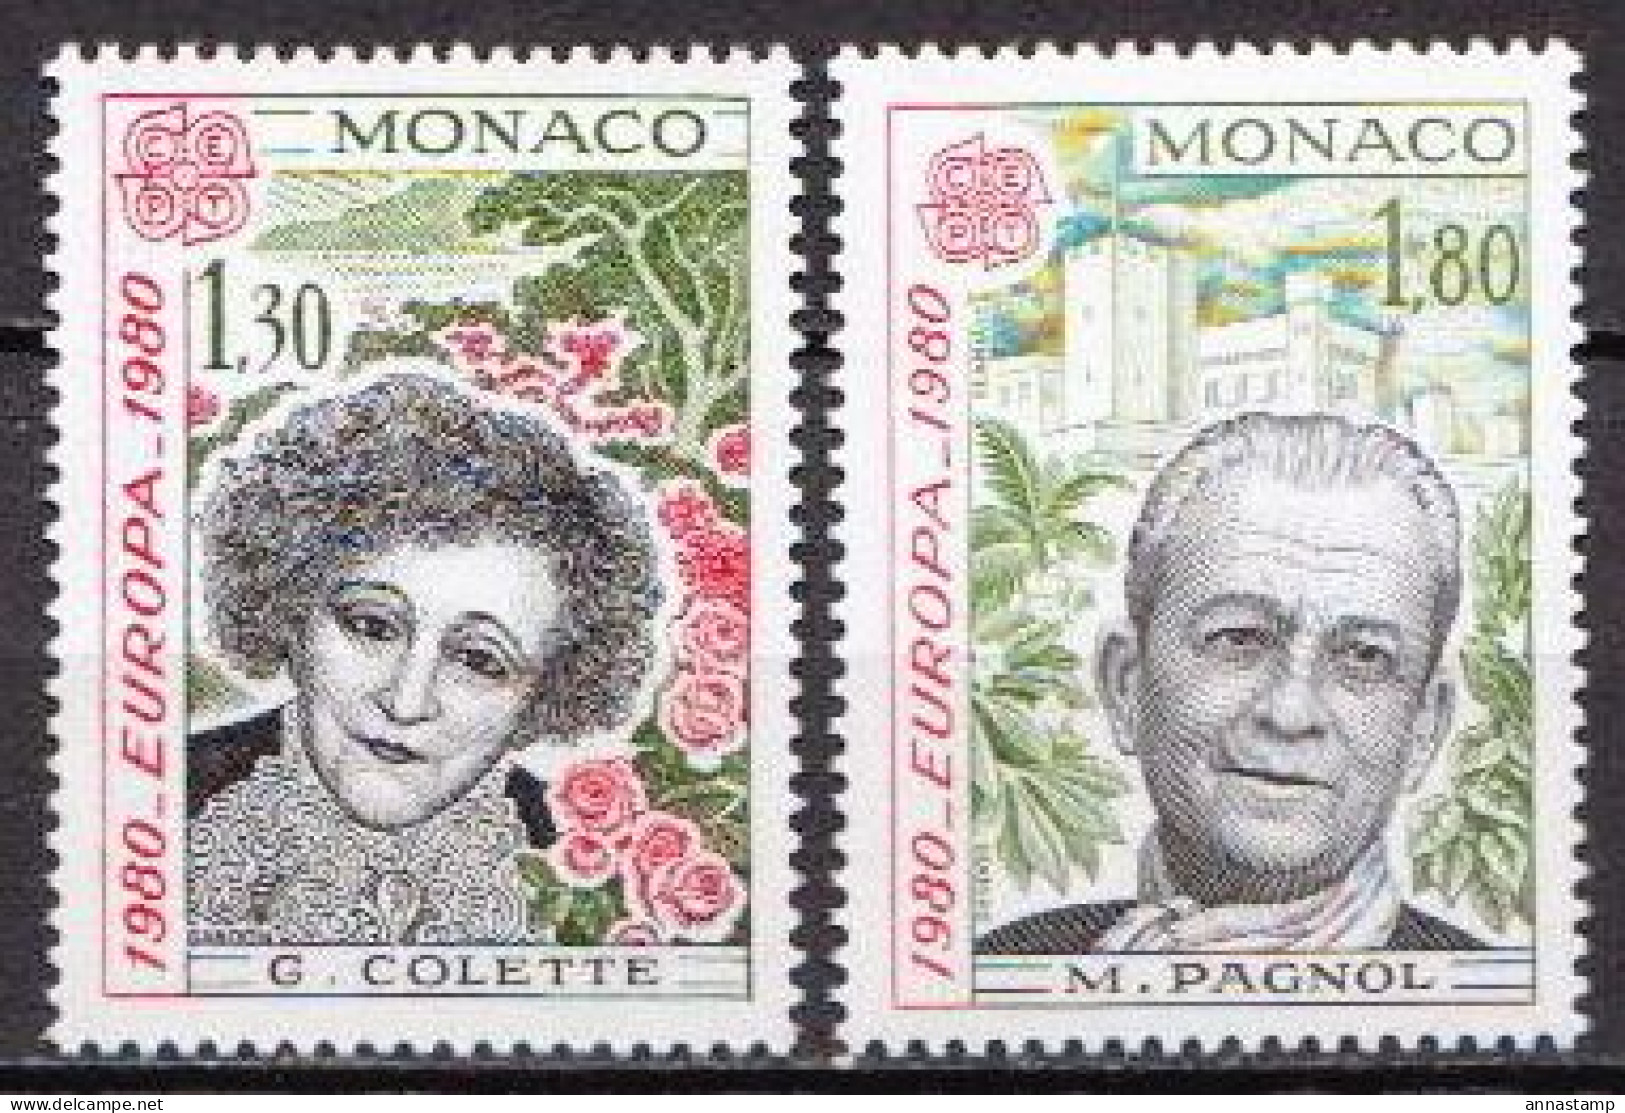 Monaco MNH Set - 1980